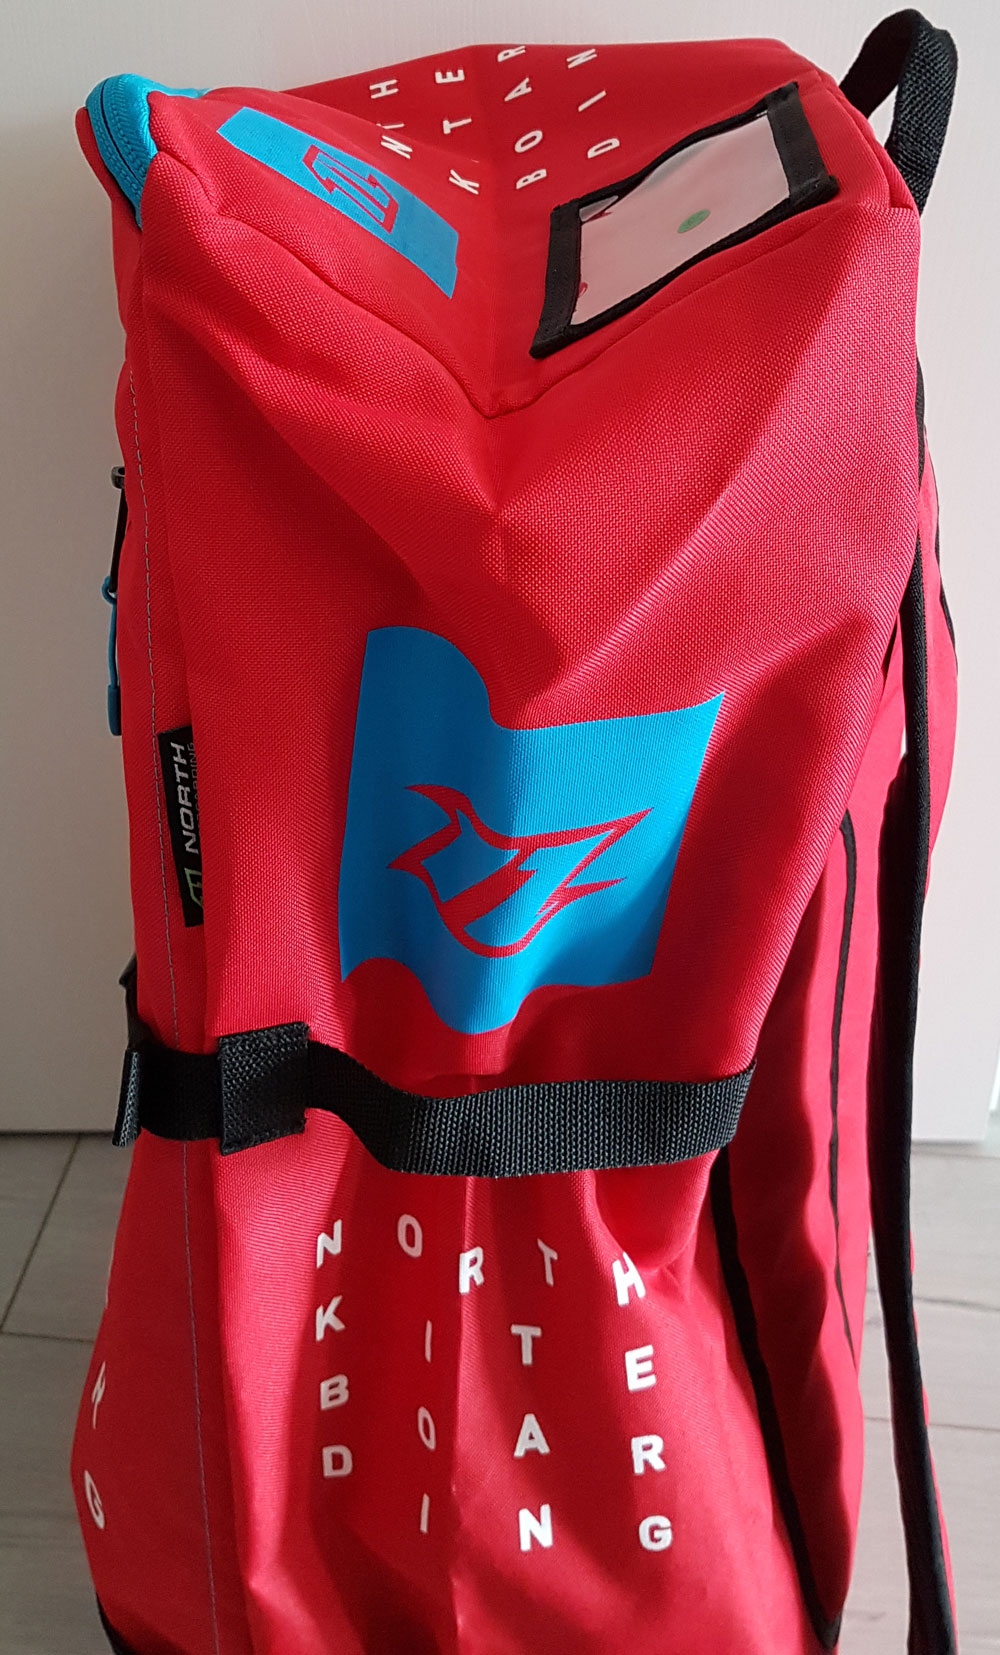 NKB Ersatz Kite Bag Spare - Packsack für North Kites - Kitebag - Kiterucksack